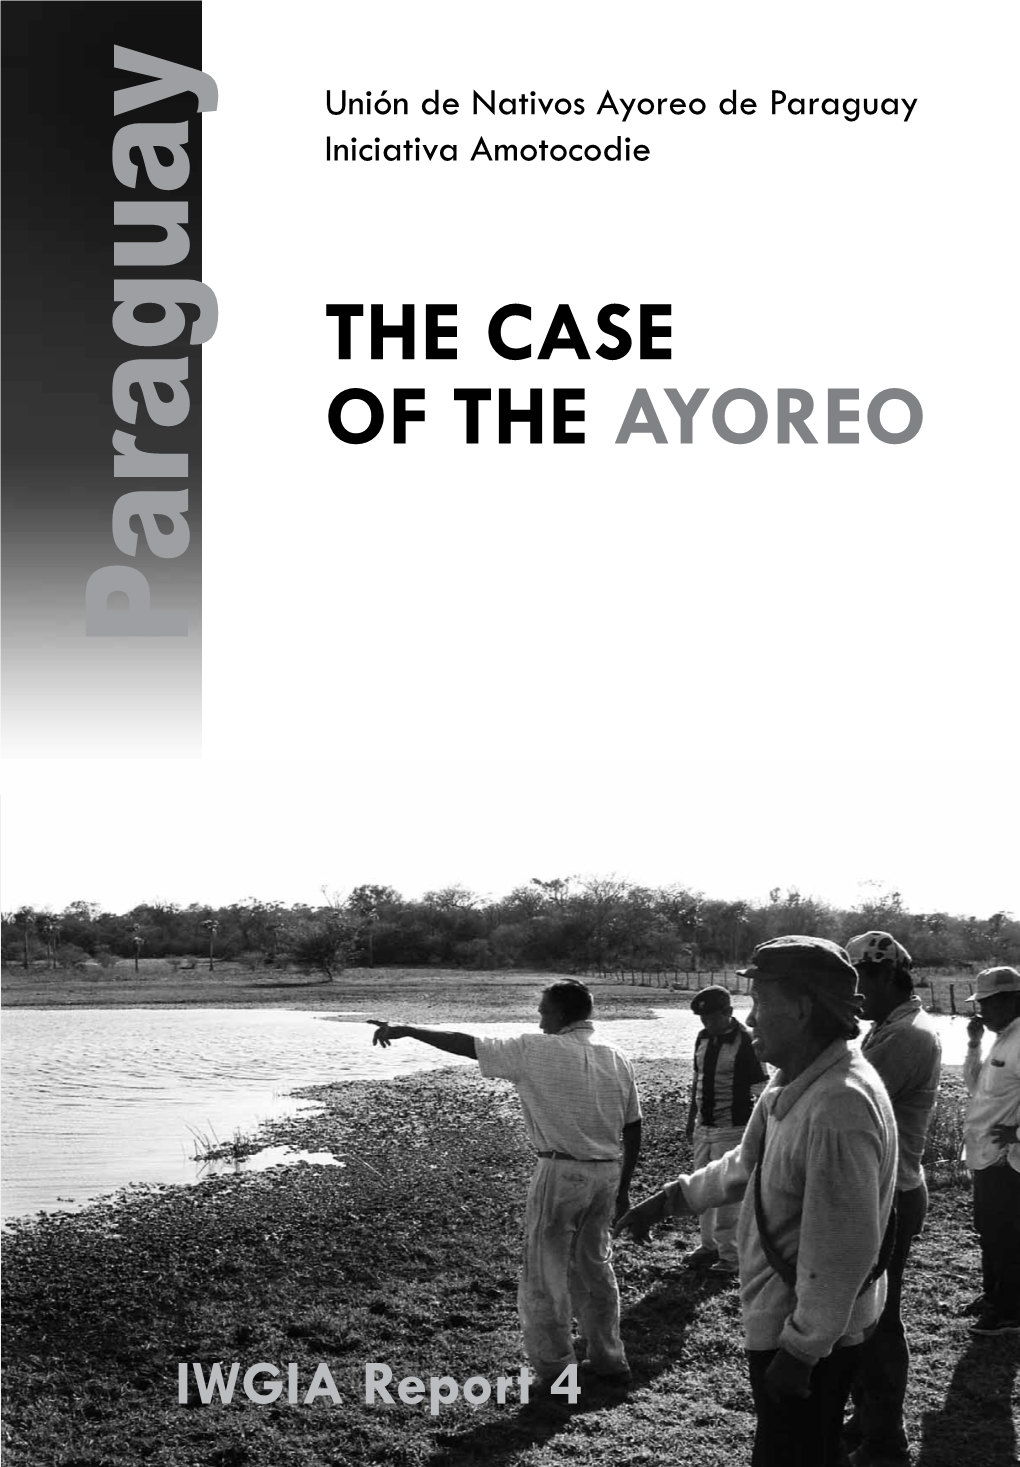 Ayoreo Deparaguay Eport 4 Eport Yoreo IWGIA Report |Paraguay | the Case of the Ayoreo